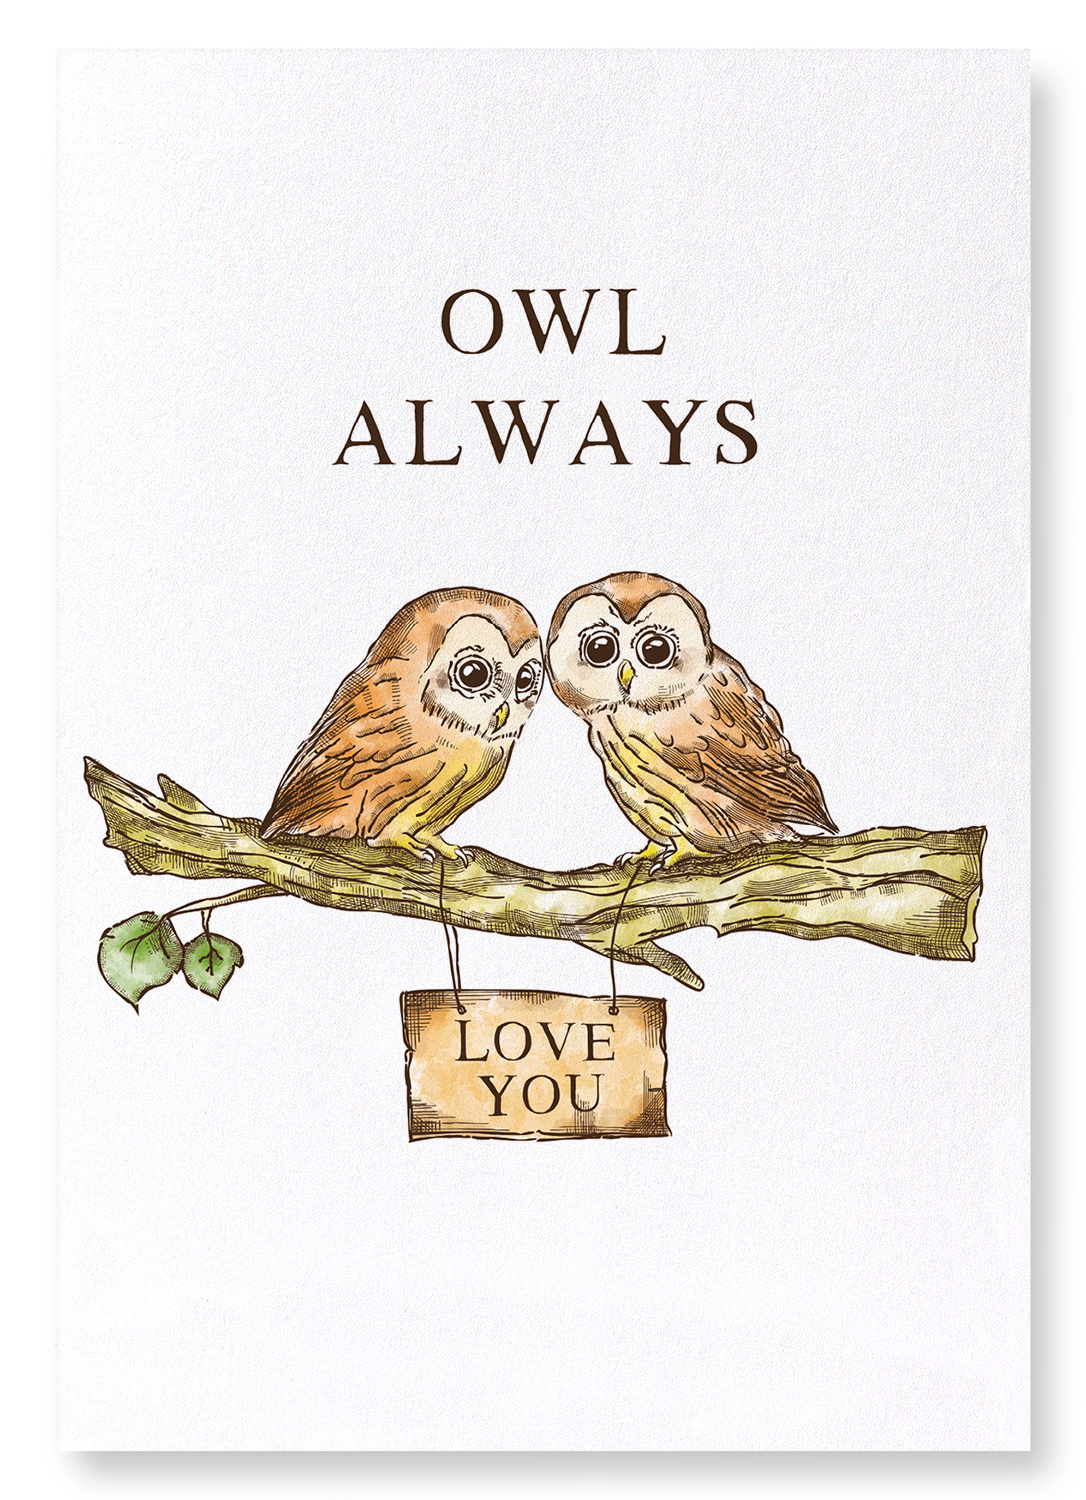 OWL ALWAYS LOVE YOU: Victorian Art Print